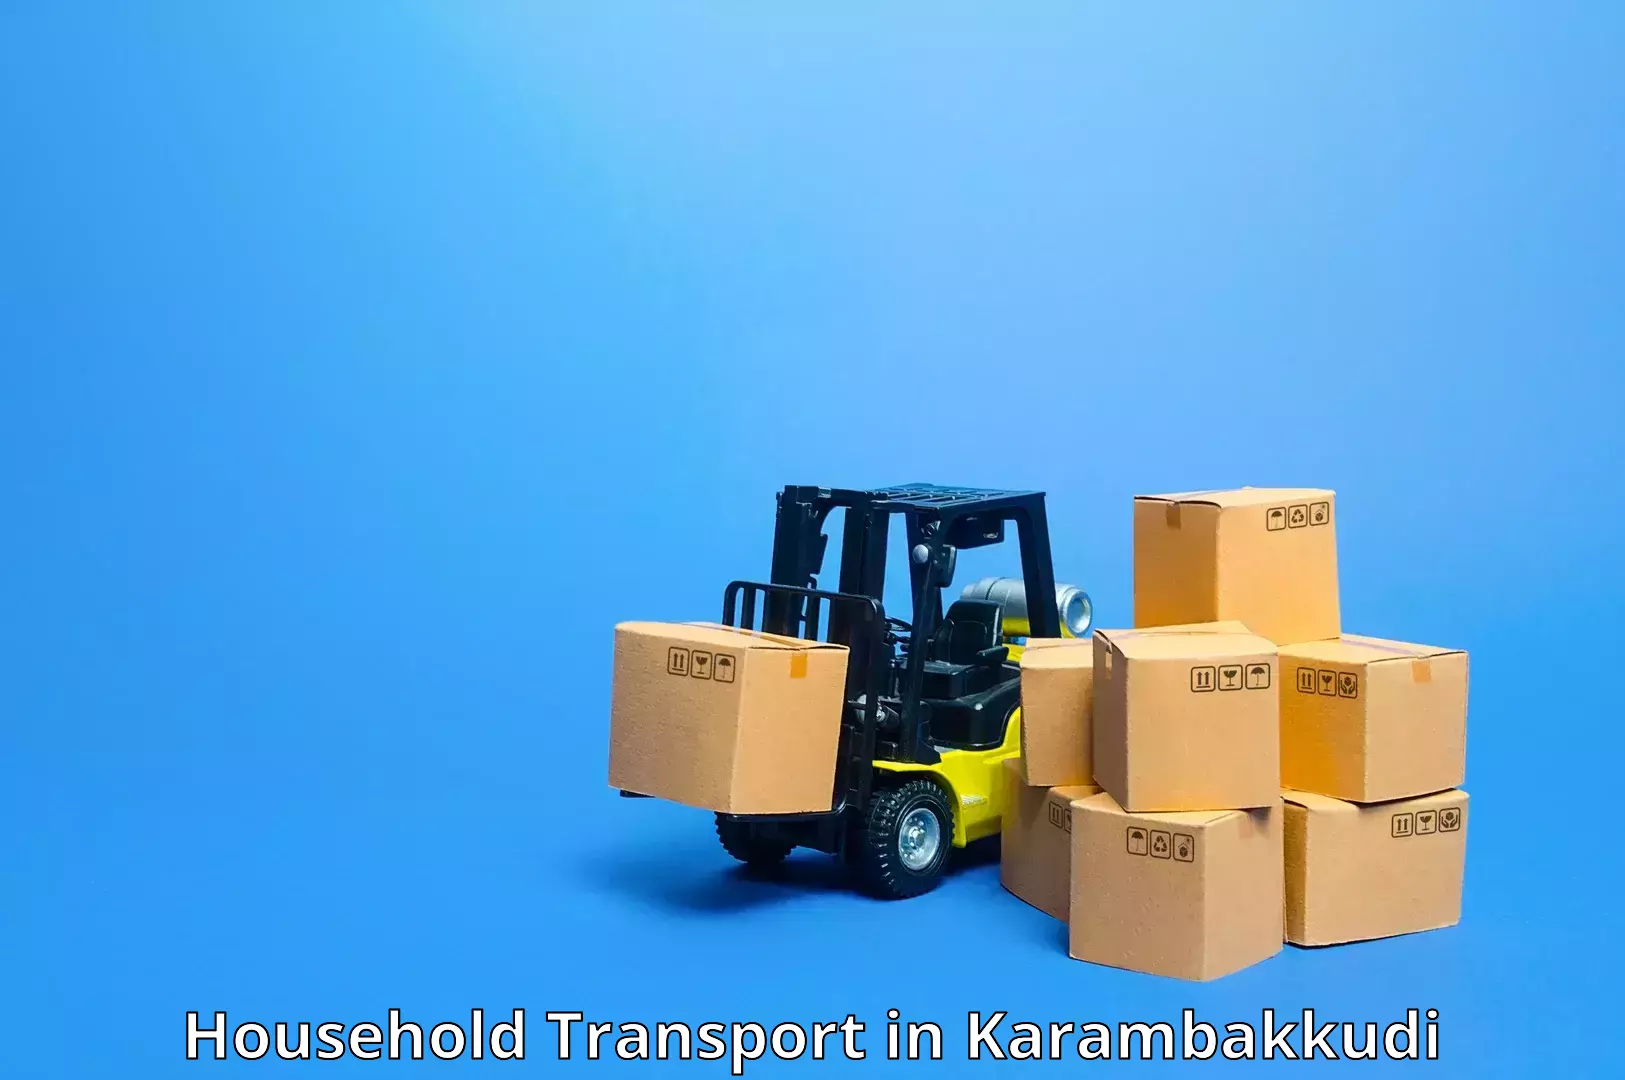 Professional goods transport in Karambakkudi